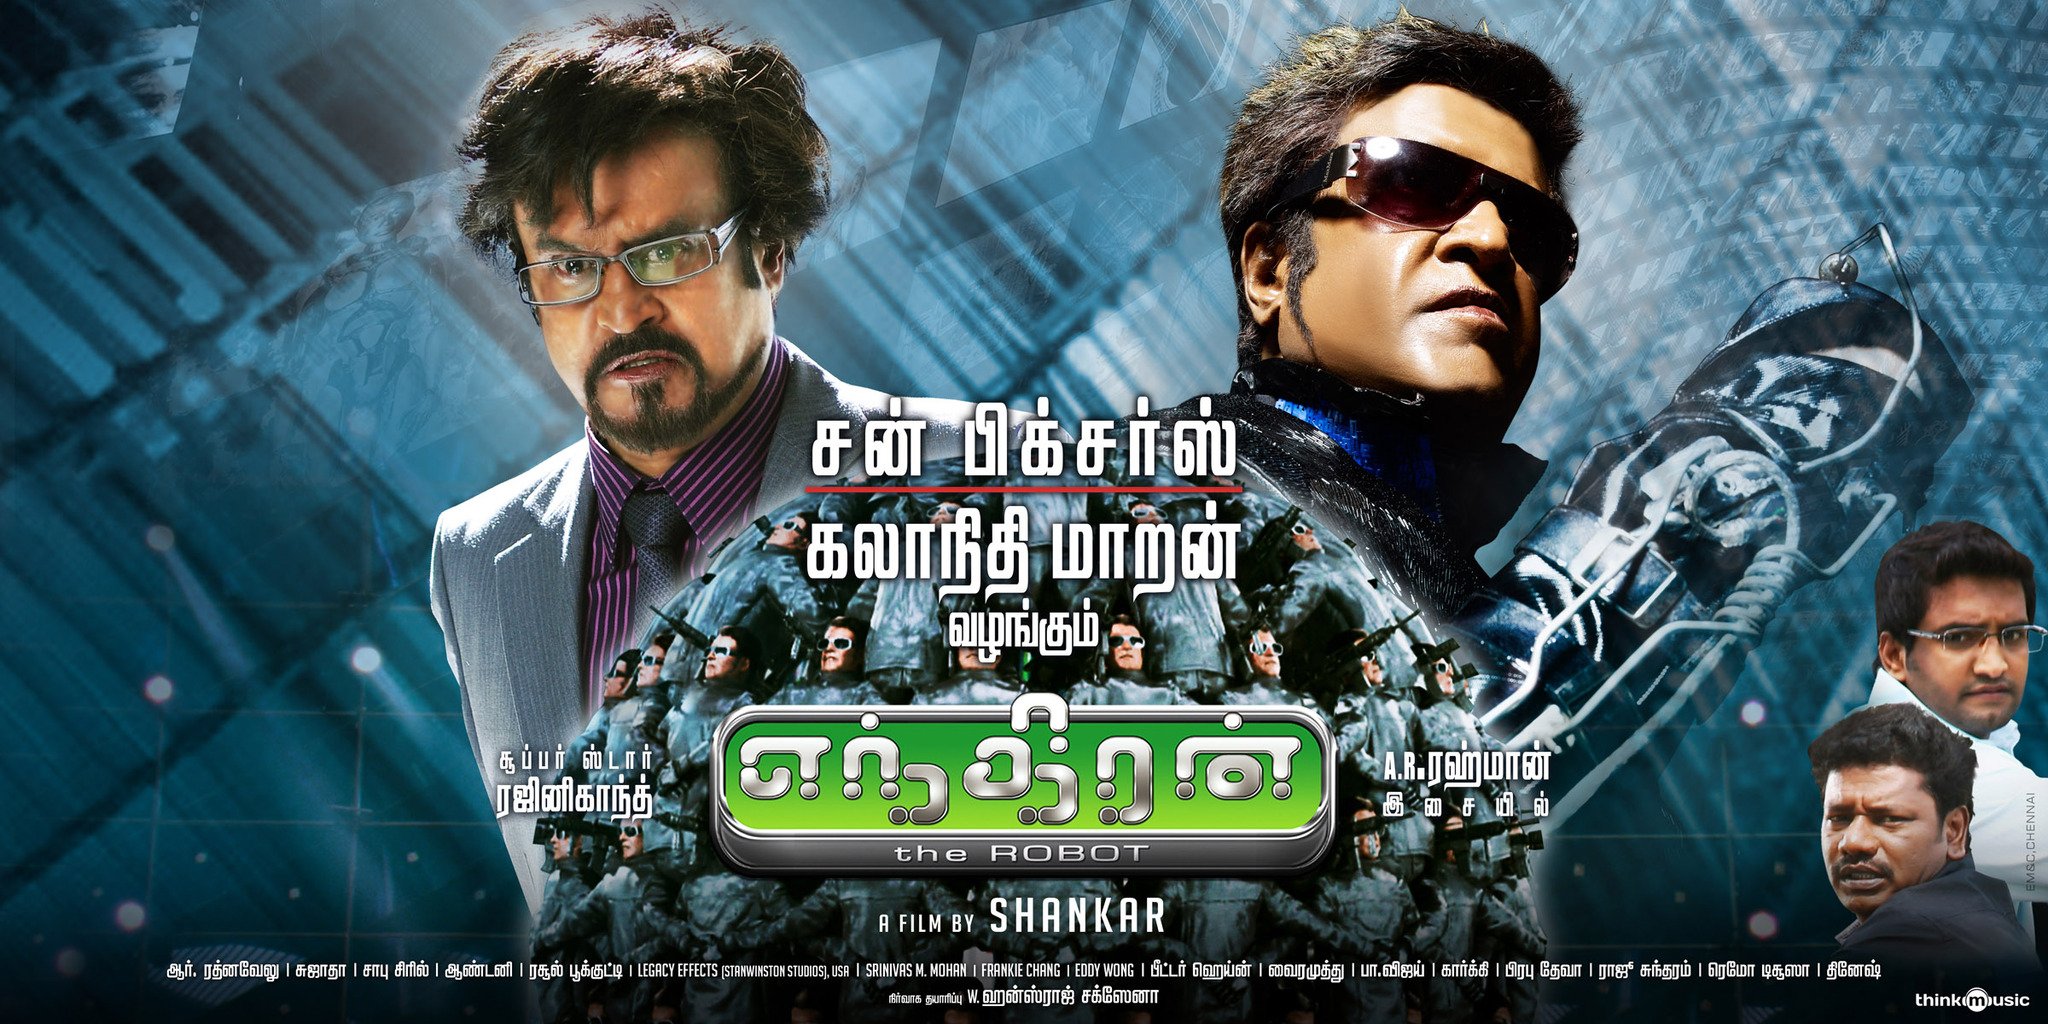 Enthiran Full Movie In Tamil Download Tamil [UPD]